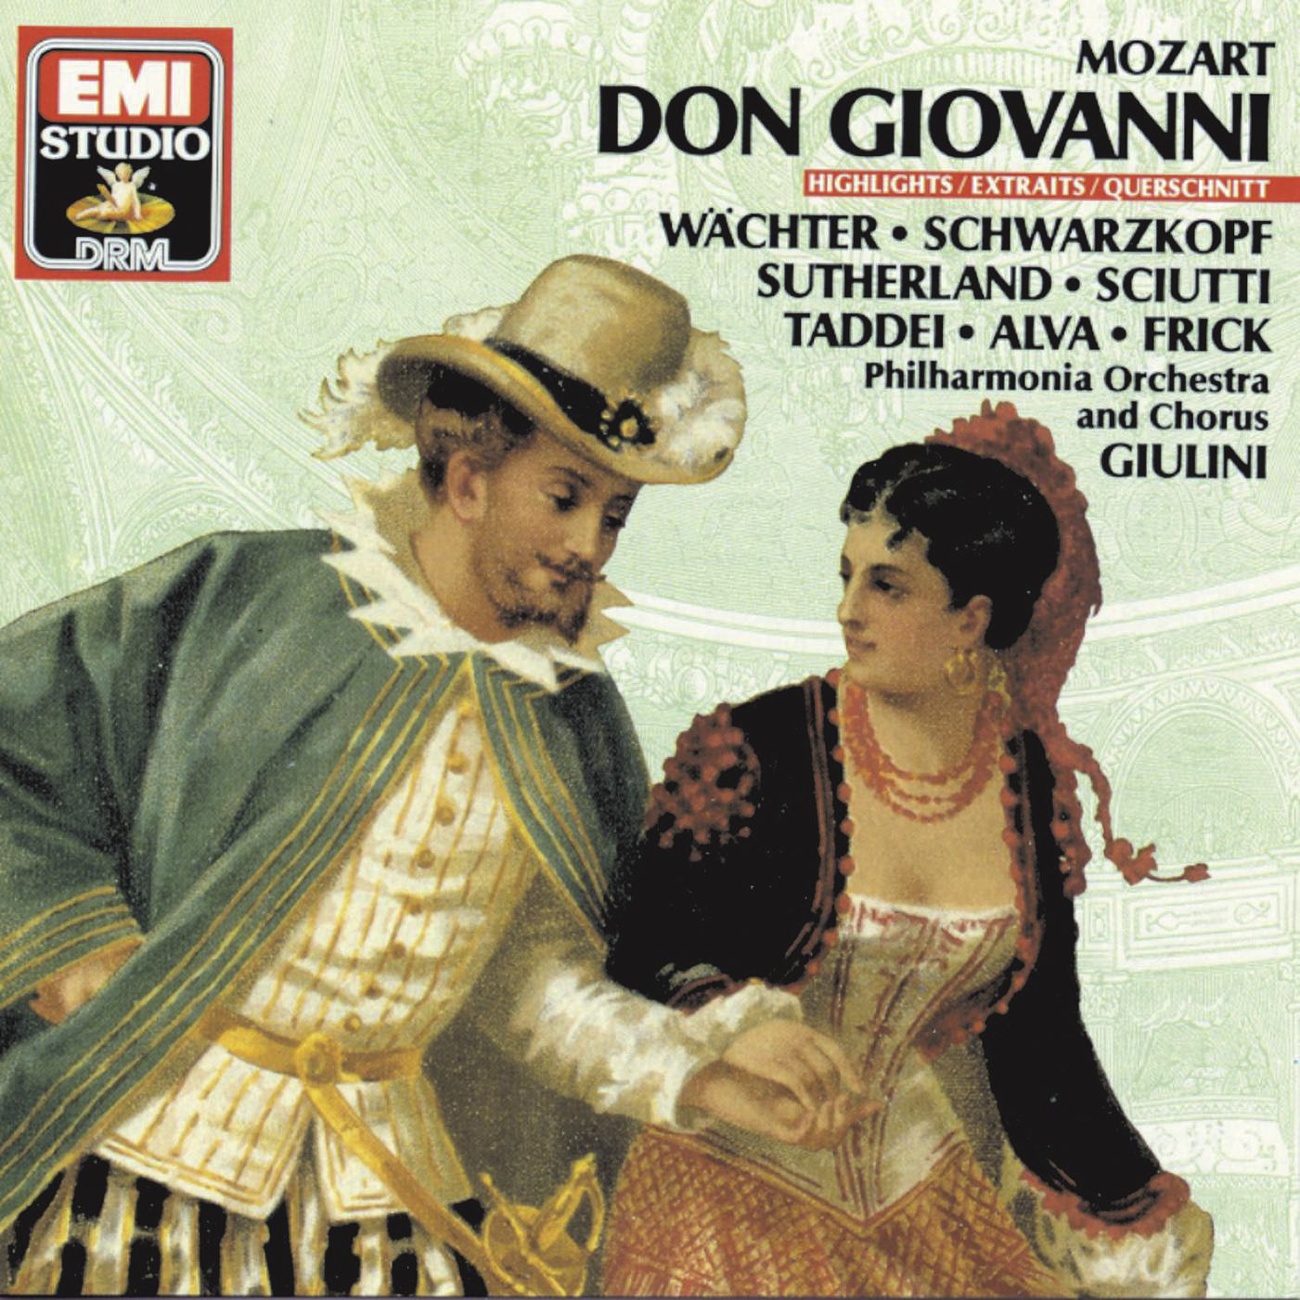 Don Giovanni (1987 Digital Remaster), Act 2: Ah, taci in giusto core (Donna Elvira, Don Giovanni, Leporello)